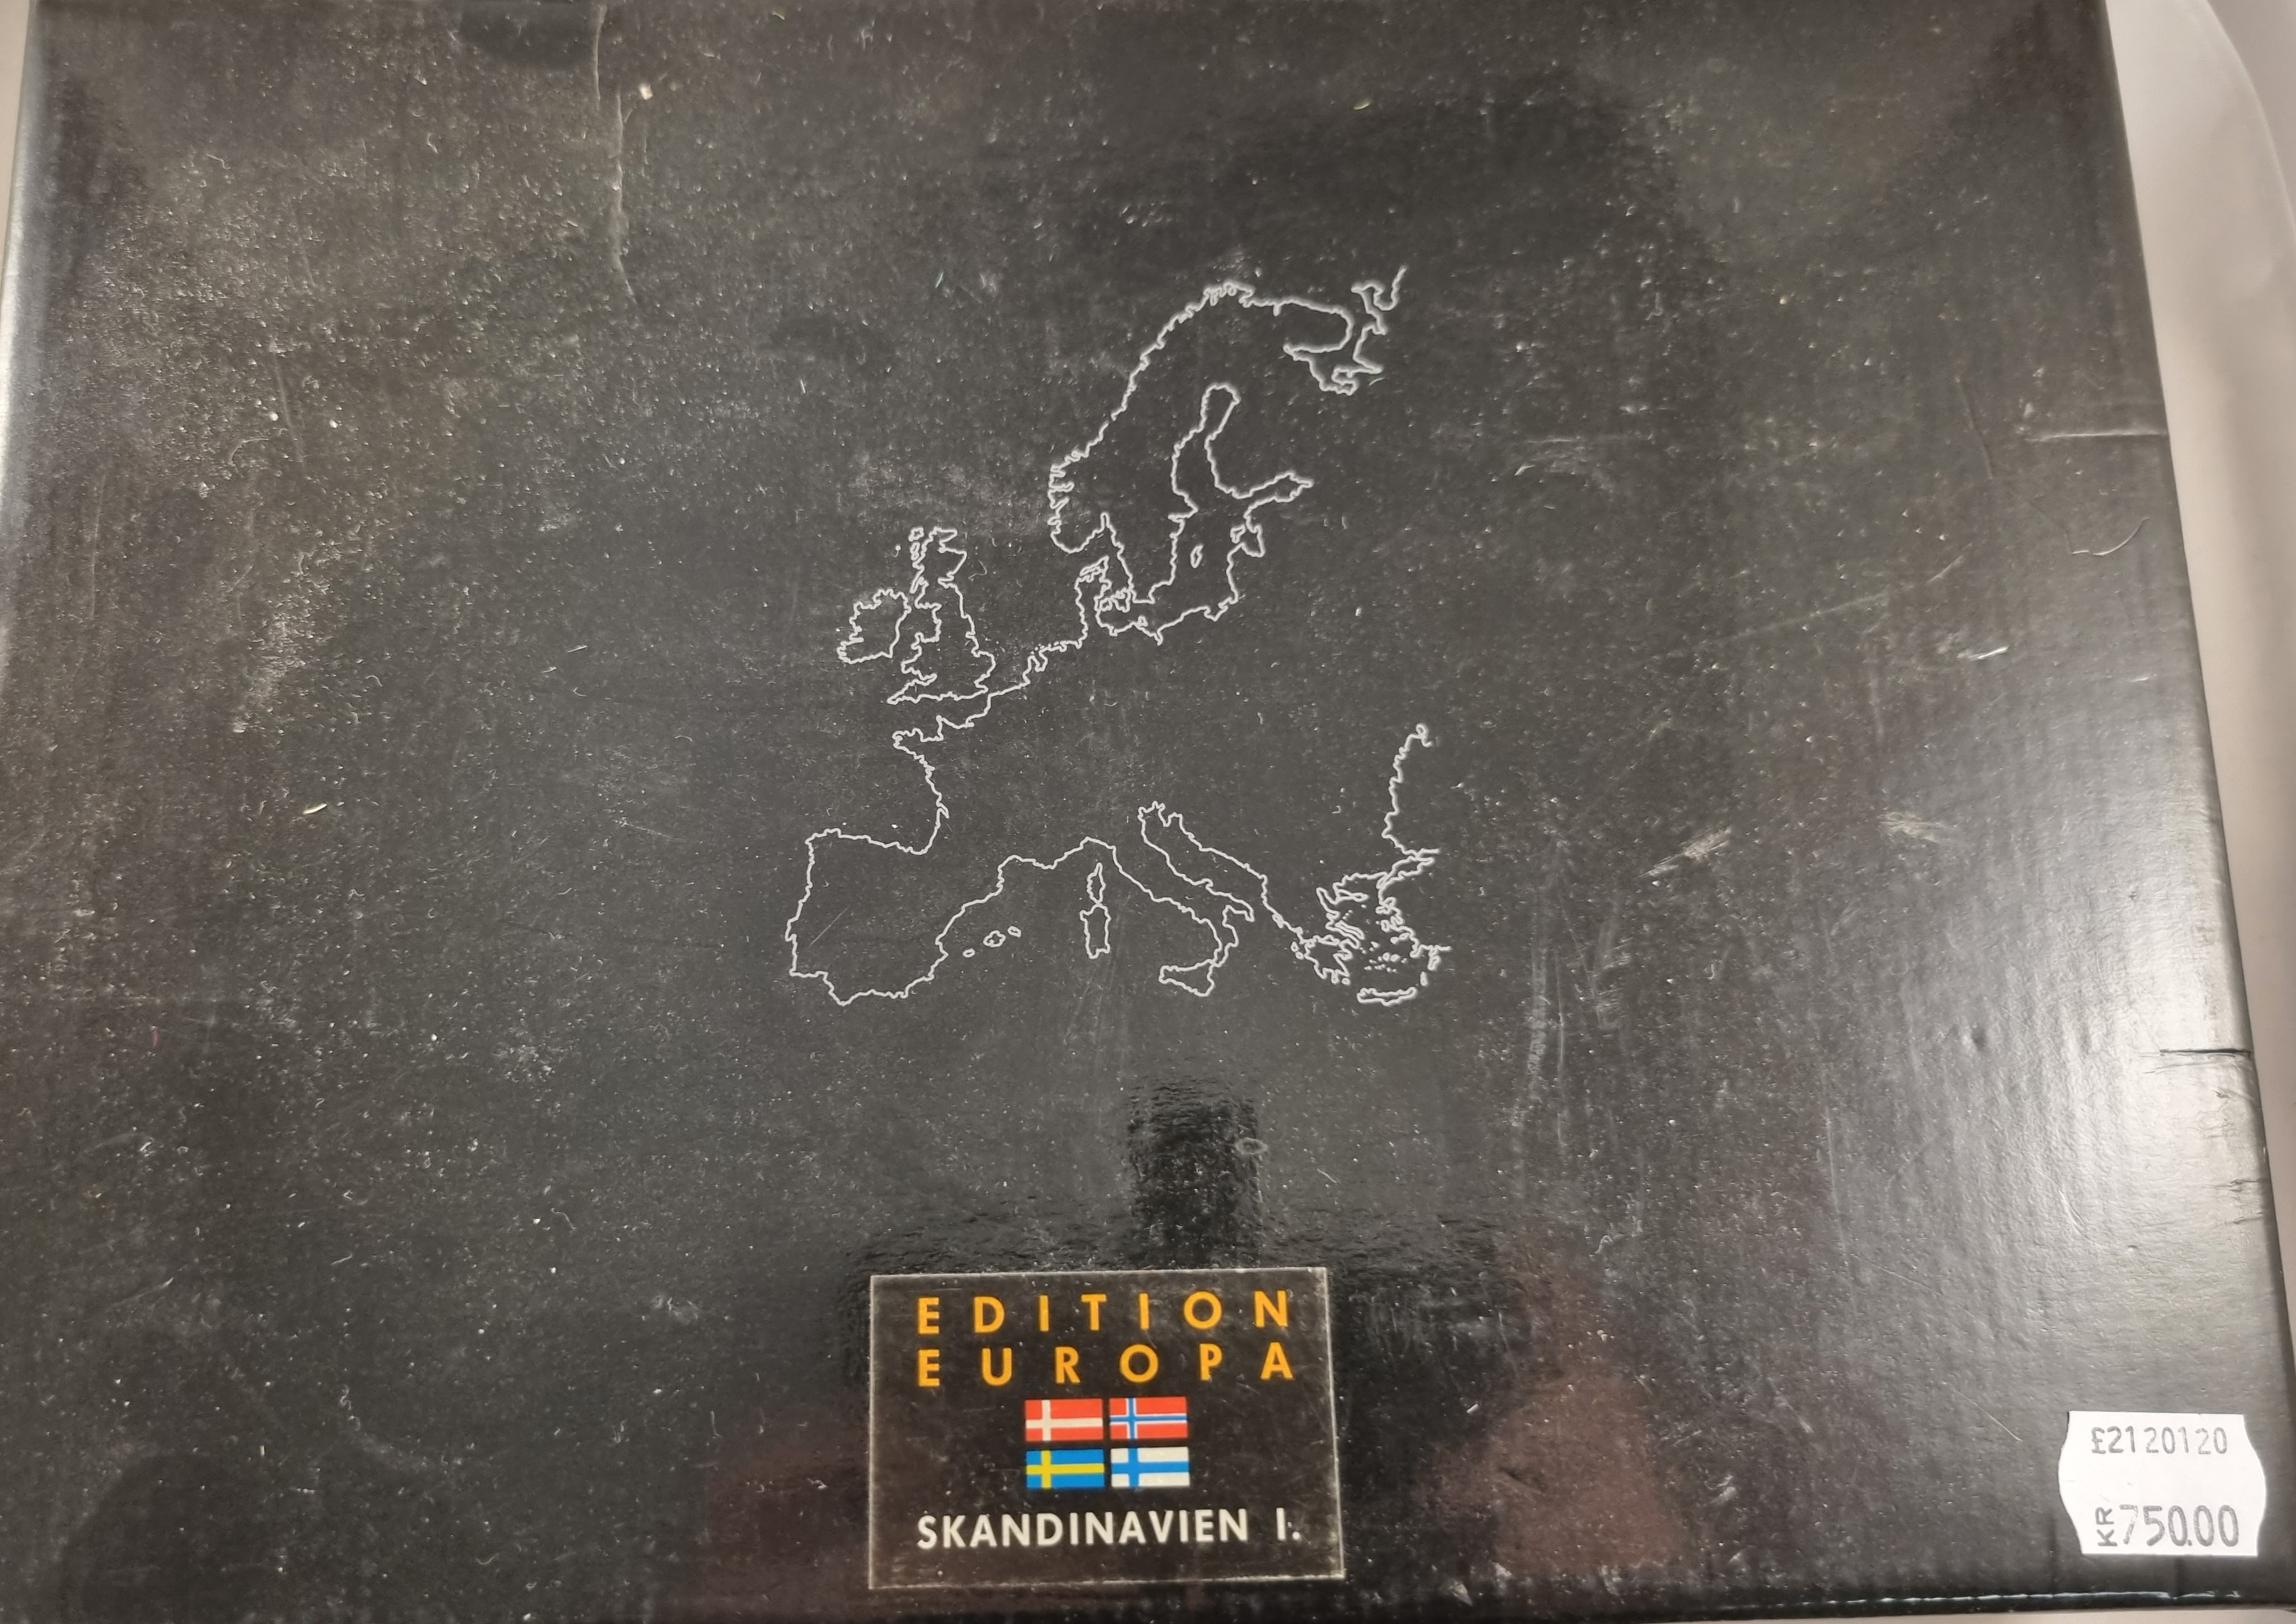 Albedo SH 0720,  Scandinavien Edition europa, Skala H0, H24